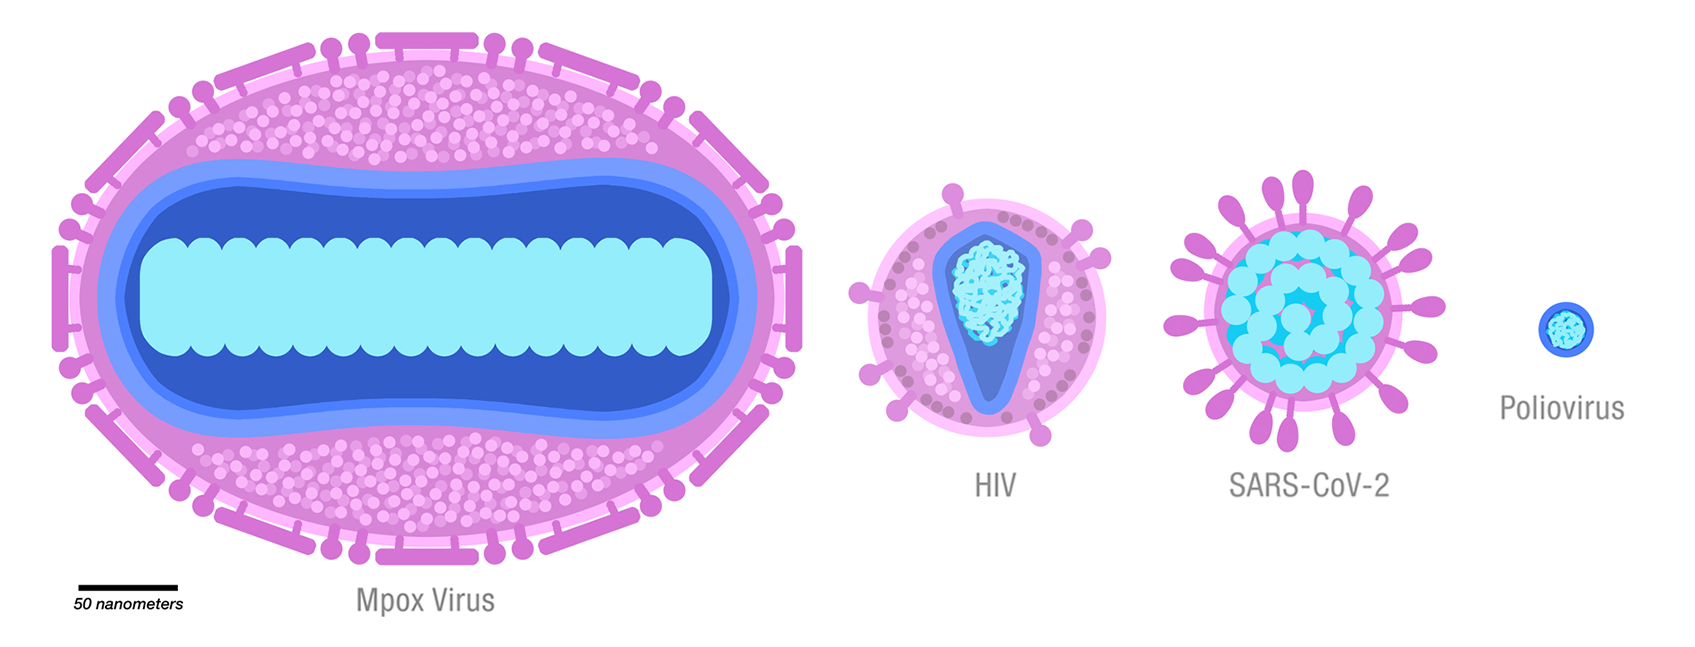 Schematic illustration of mpox virus, HIV, SARS-CoV-2, and polovirus drawn to scale.